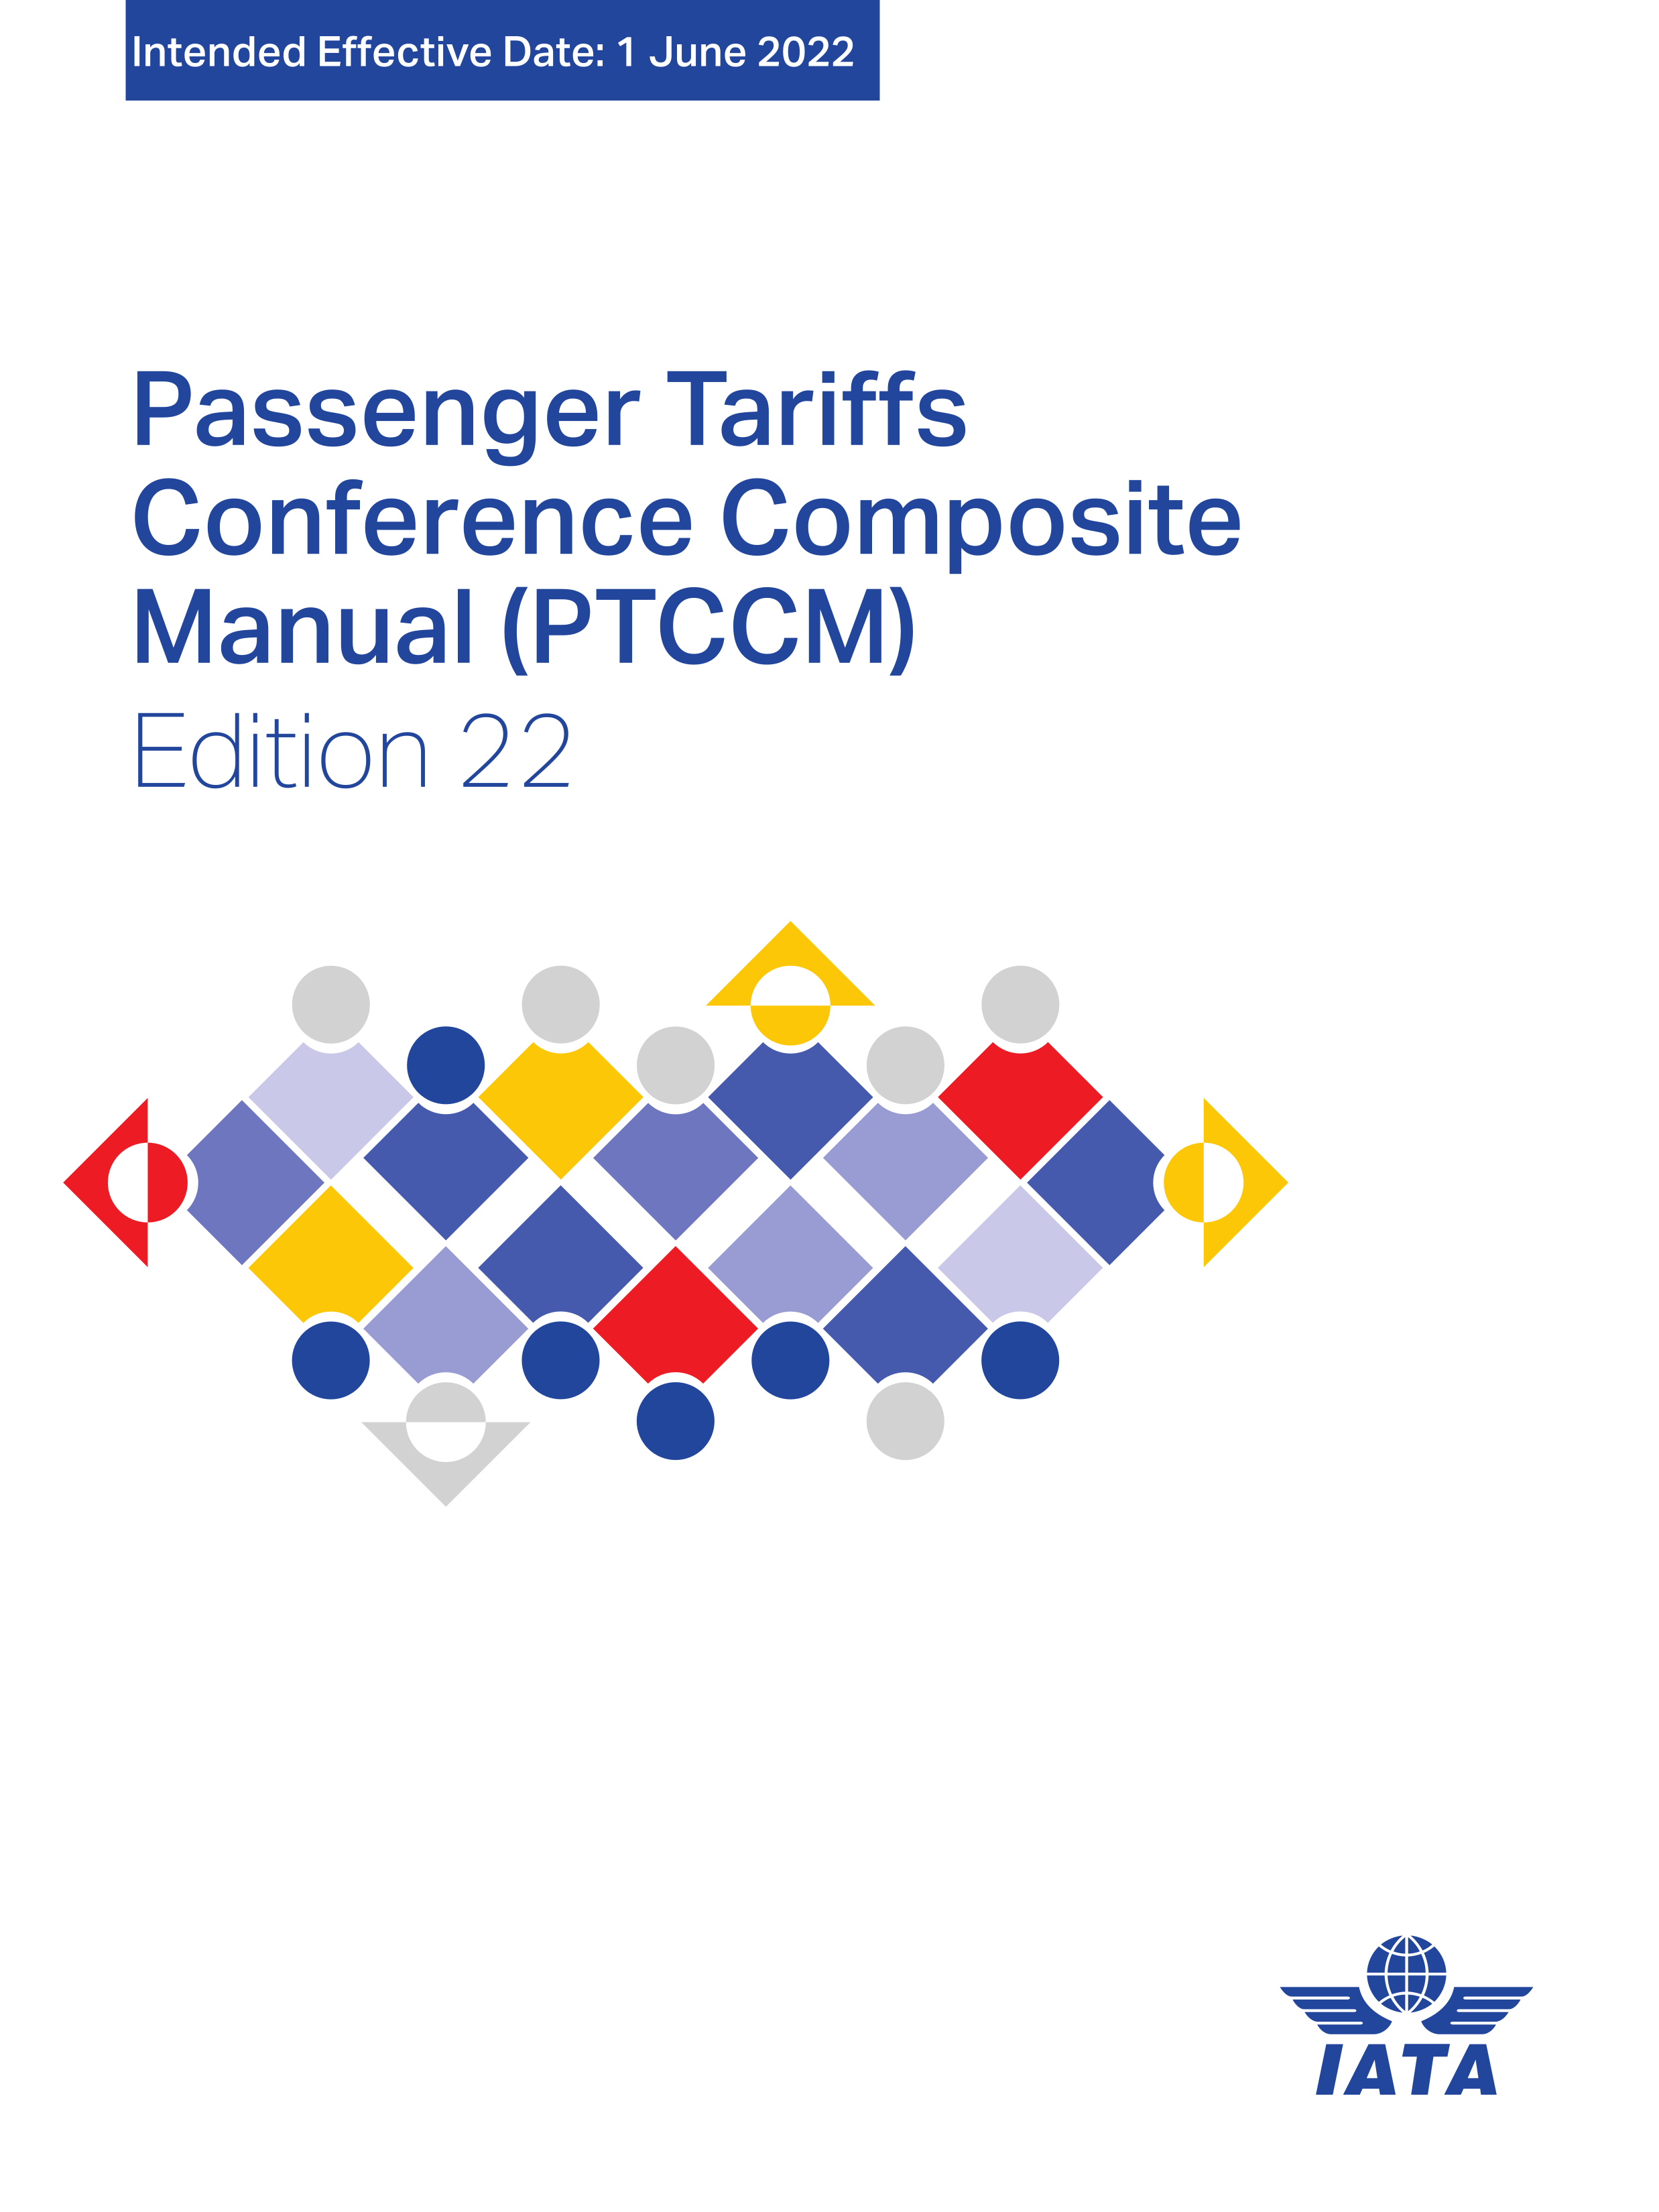 IATA PTCCM 2022